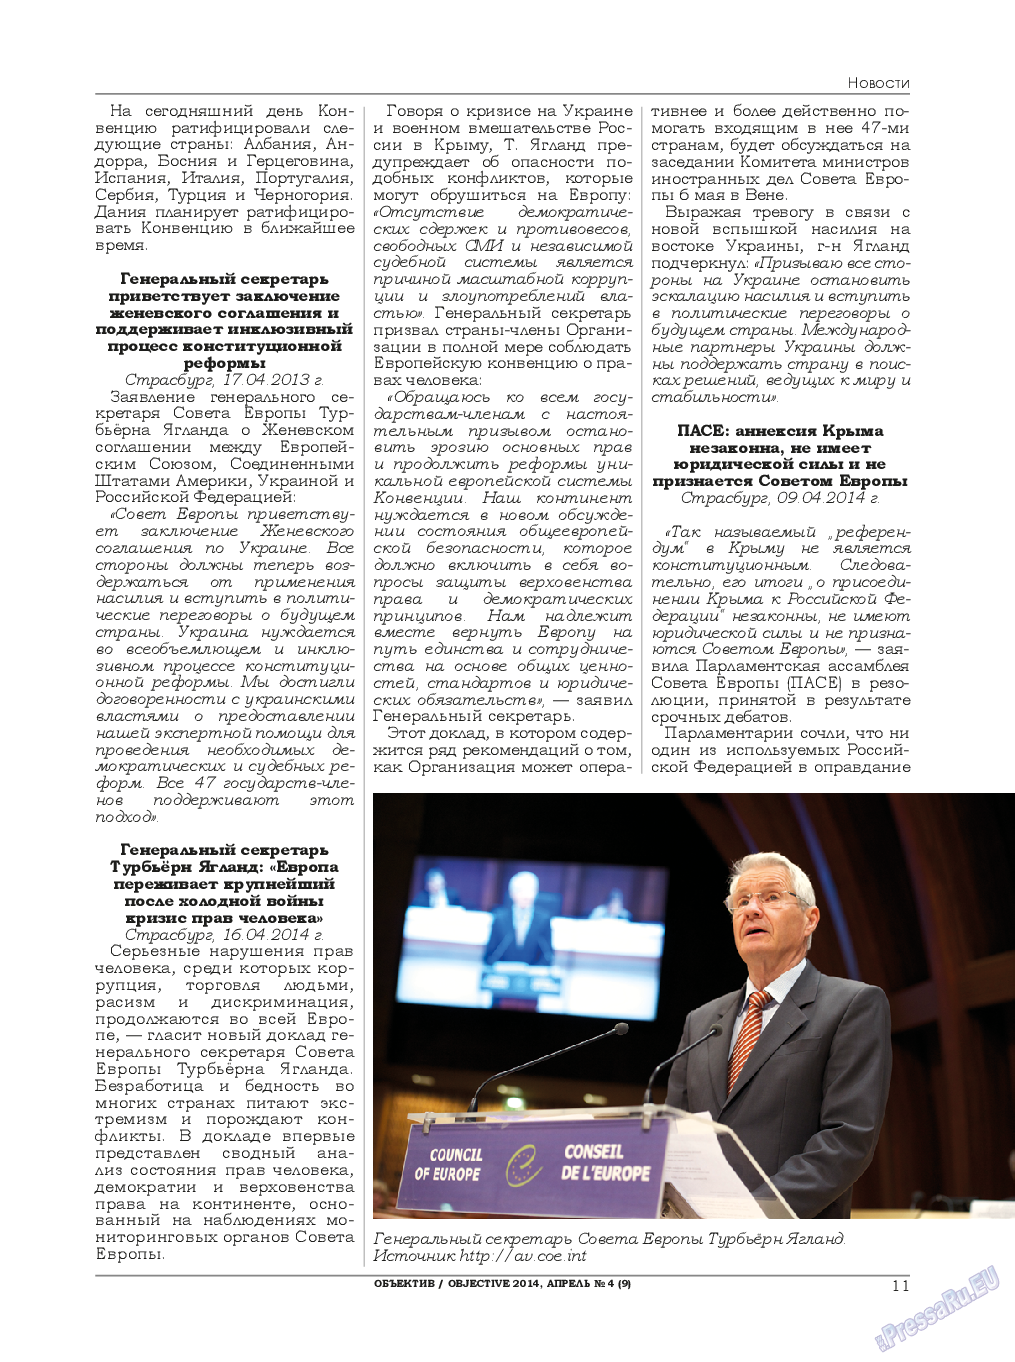 Объектив EU, журнал. 2014 №4 стр.11